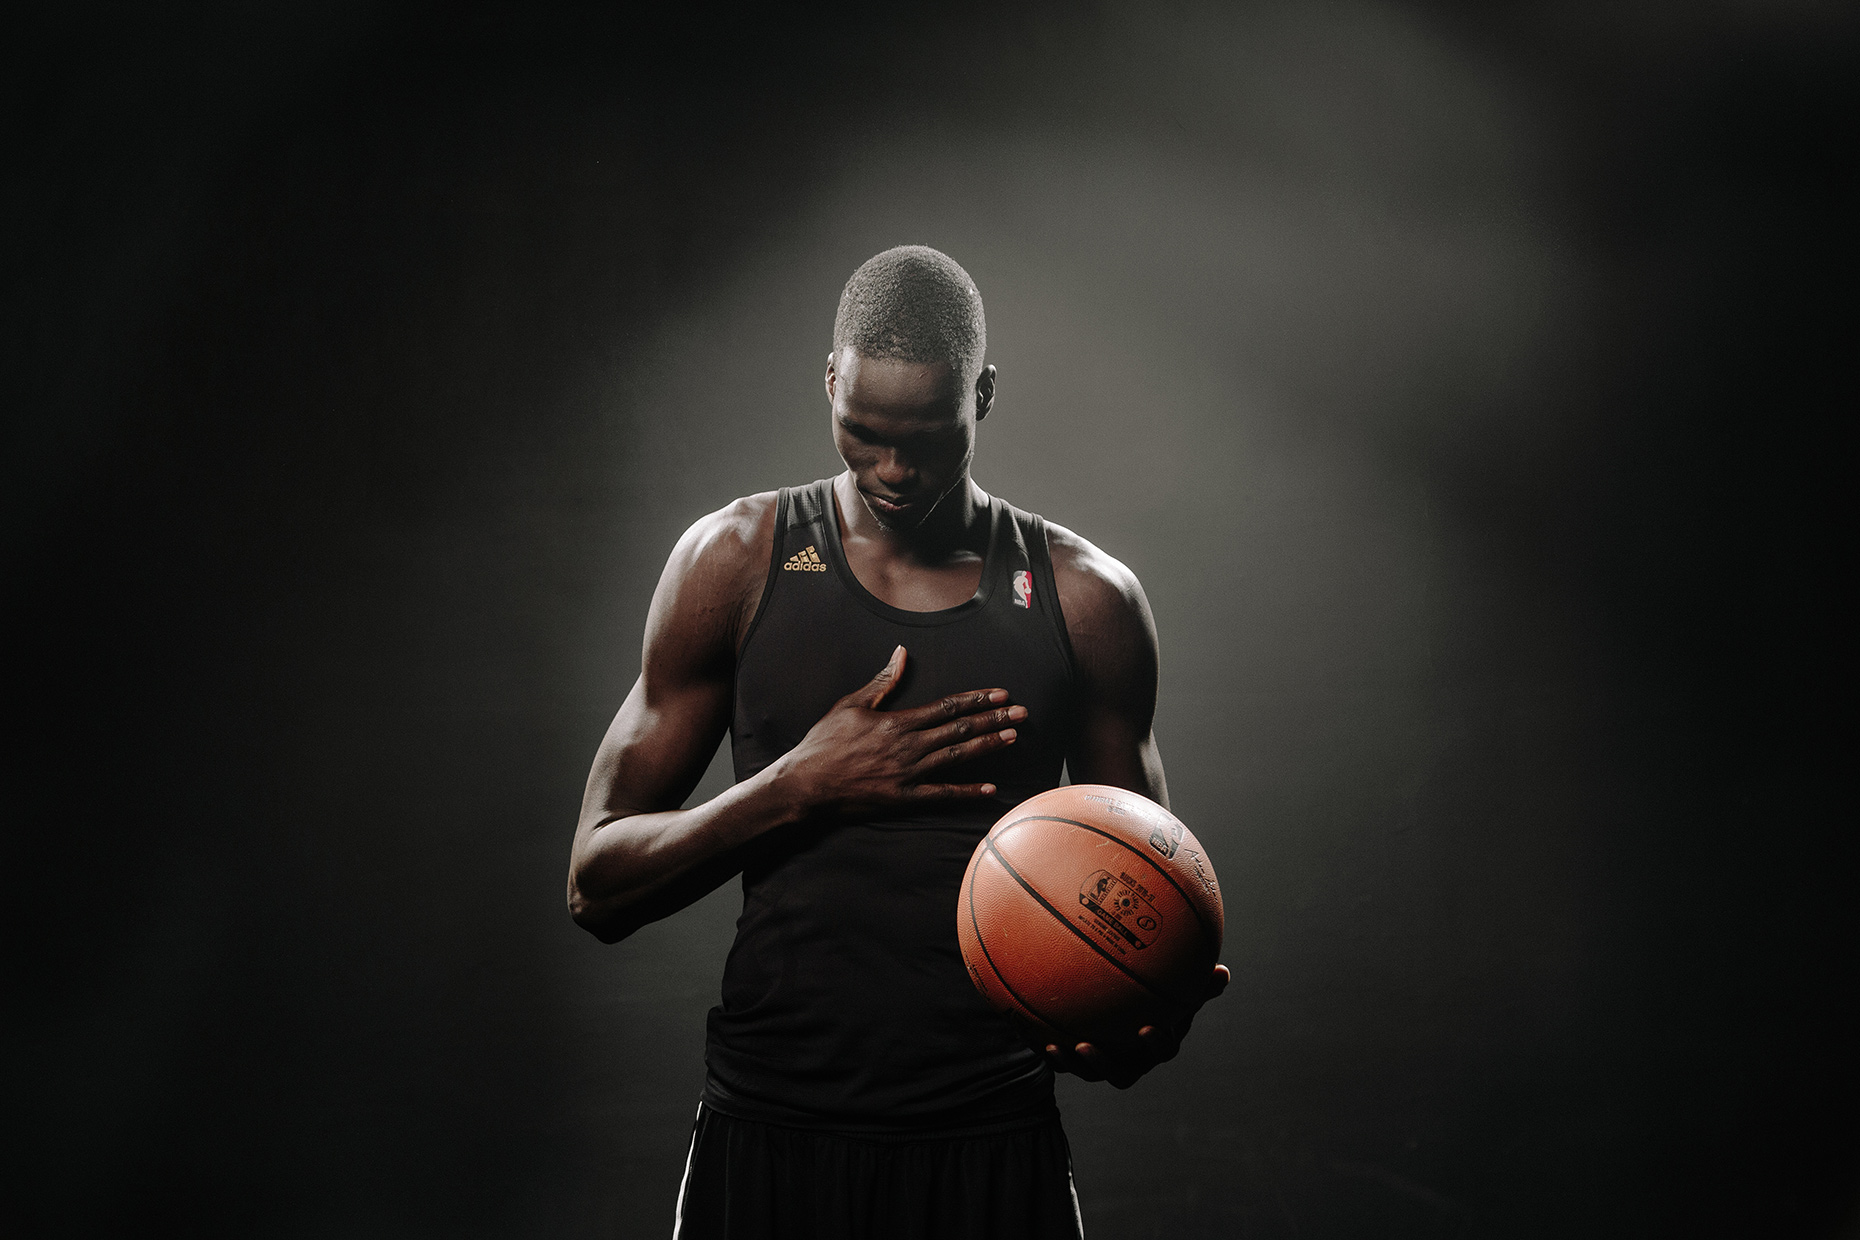 Thon Maker, a rookie player on the Milwaukee Bucks basketball team, age 19.